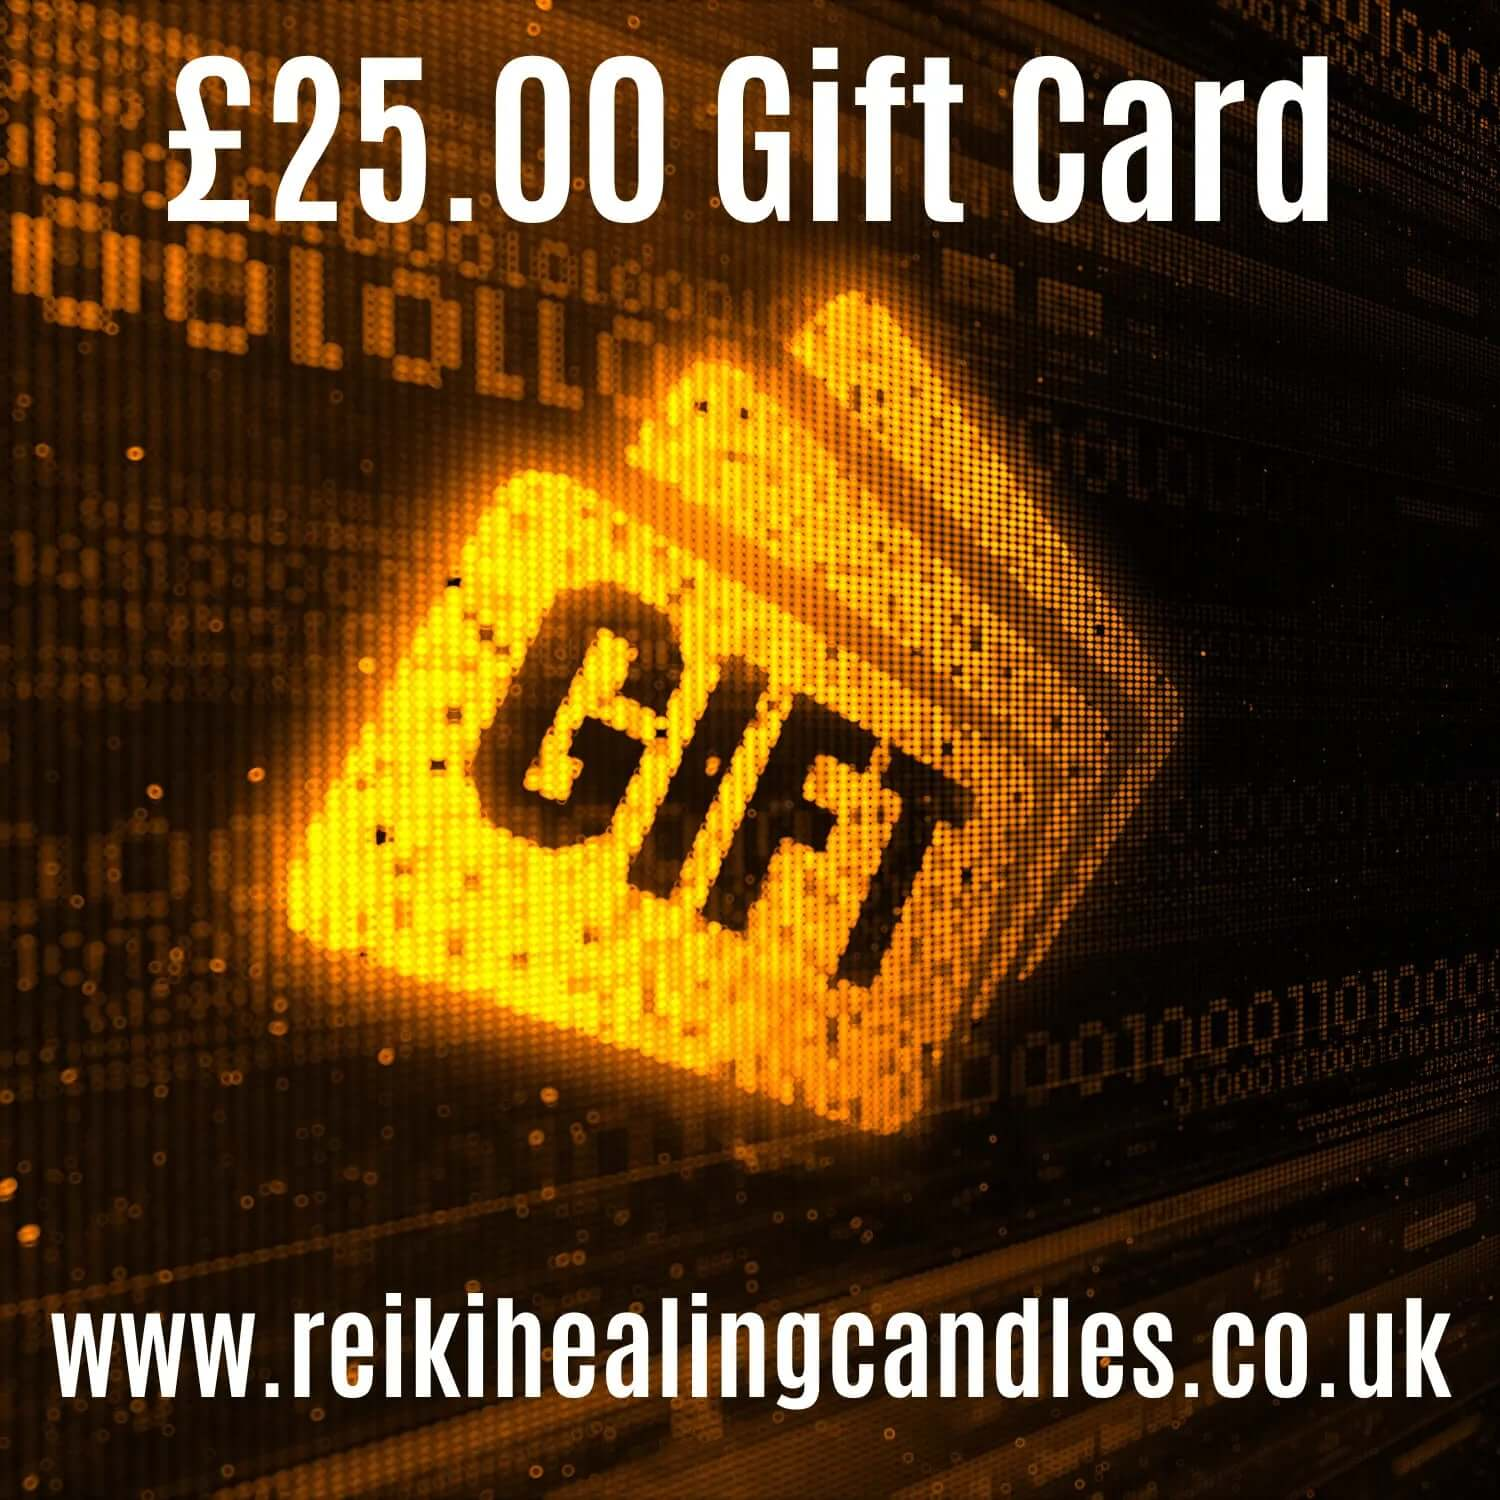 Reiki Healing Candle Gift Card Reiki Healing Candles